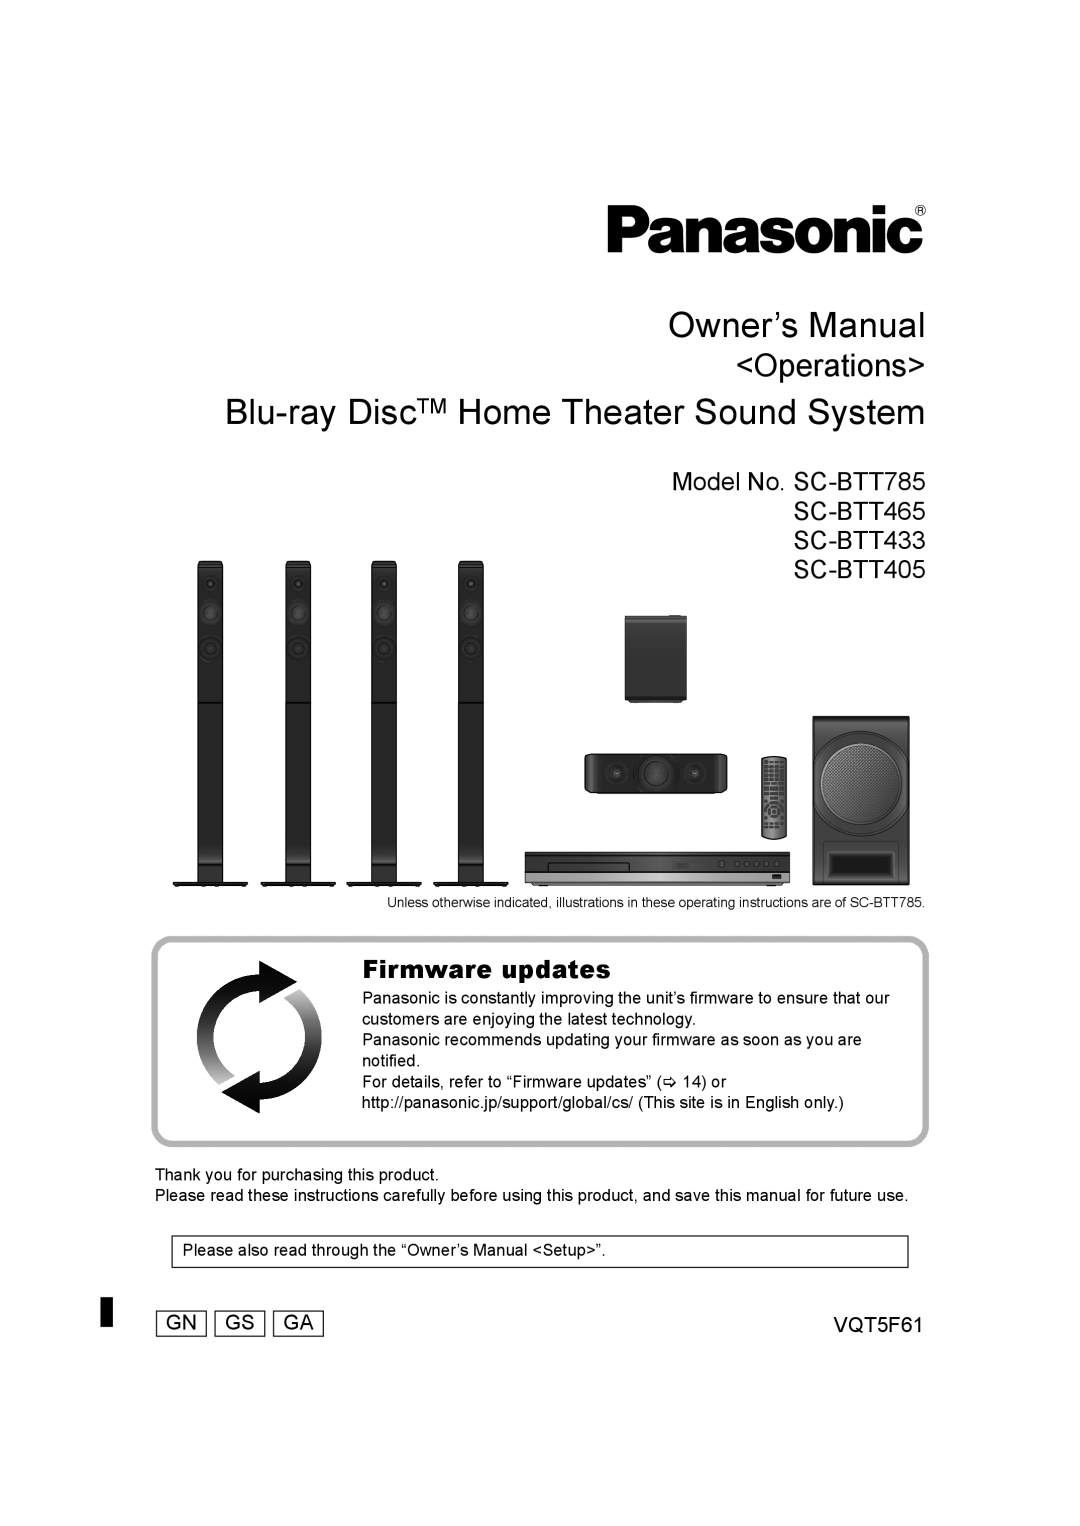 Panasonic SC-BTT465, SC-BTT405, SC-BTT105 owner manual Blu-ray DiscTM Home Theater Sound System 